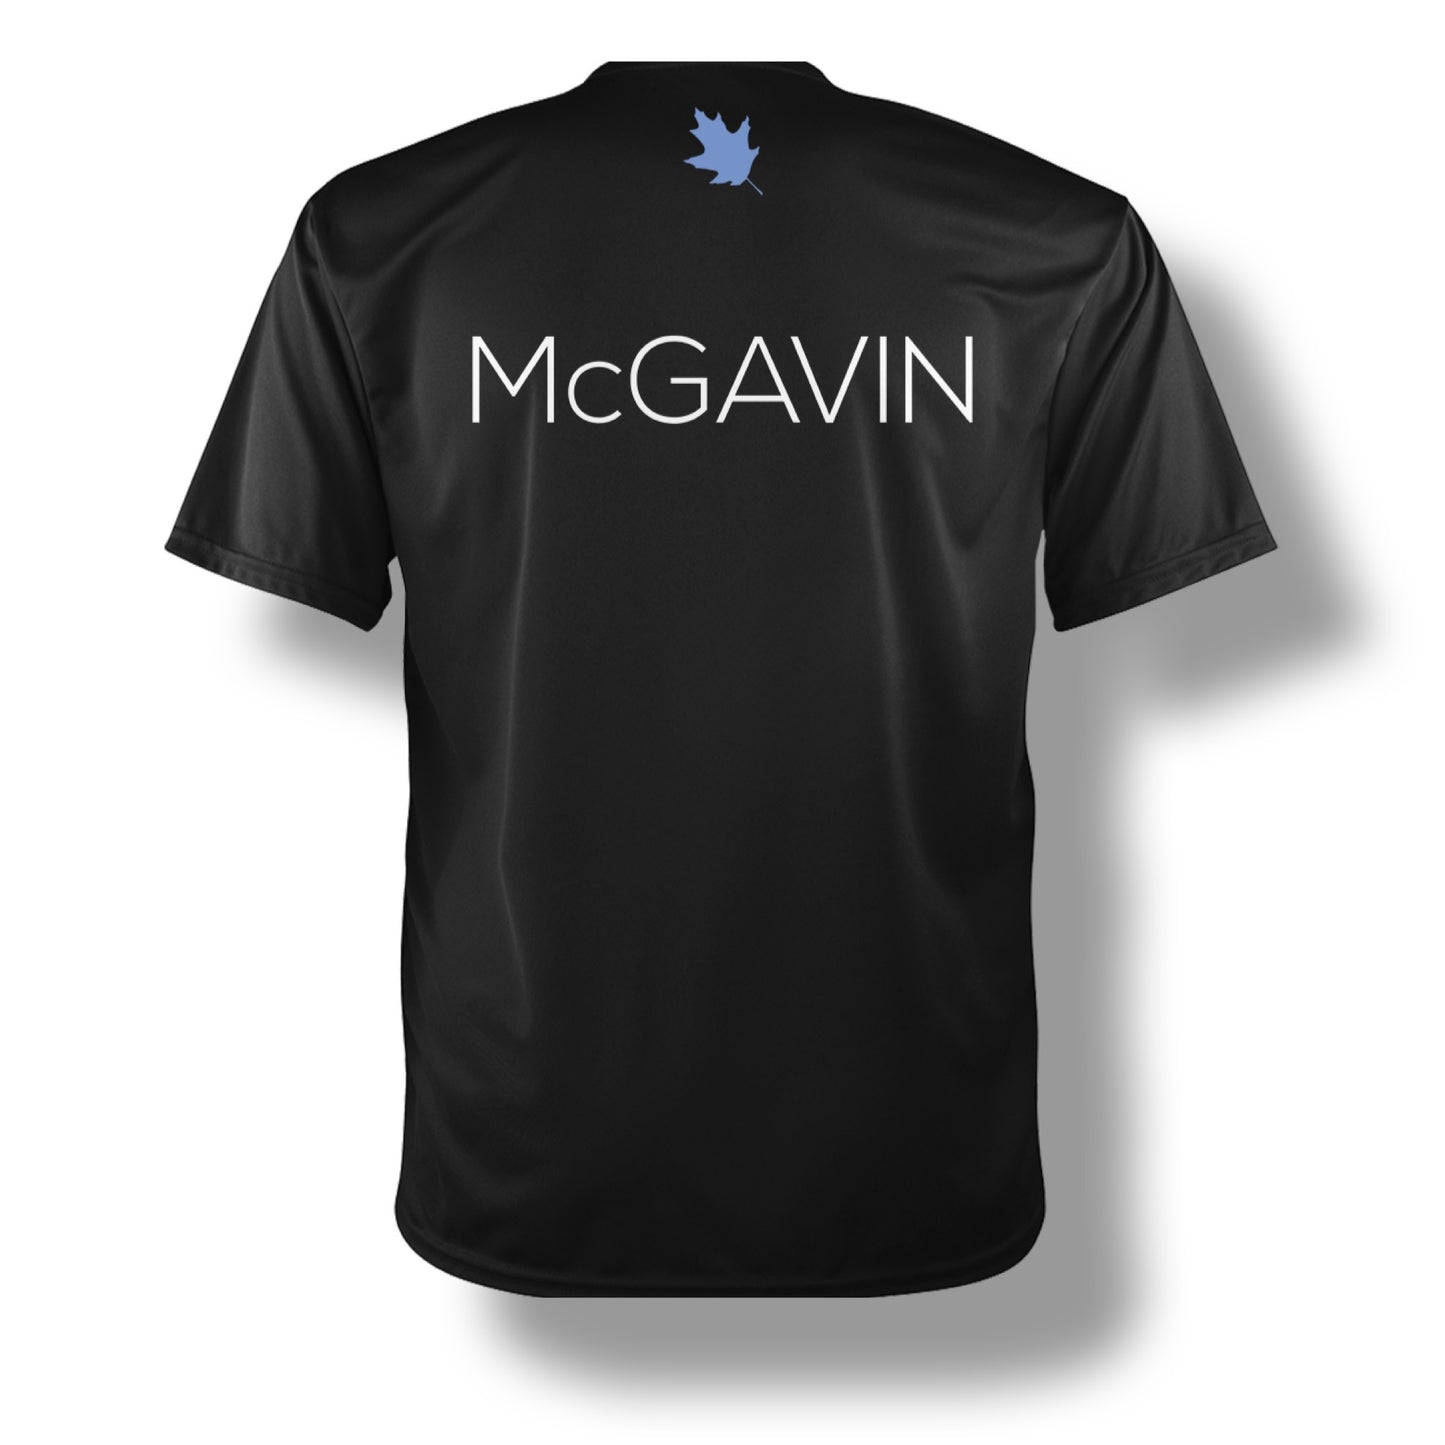 The McGavin, Shooter T-Shirt